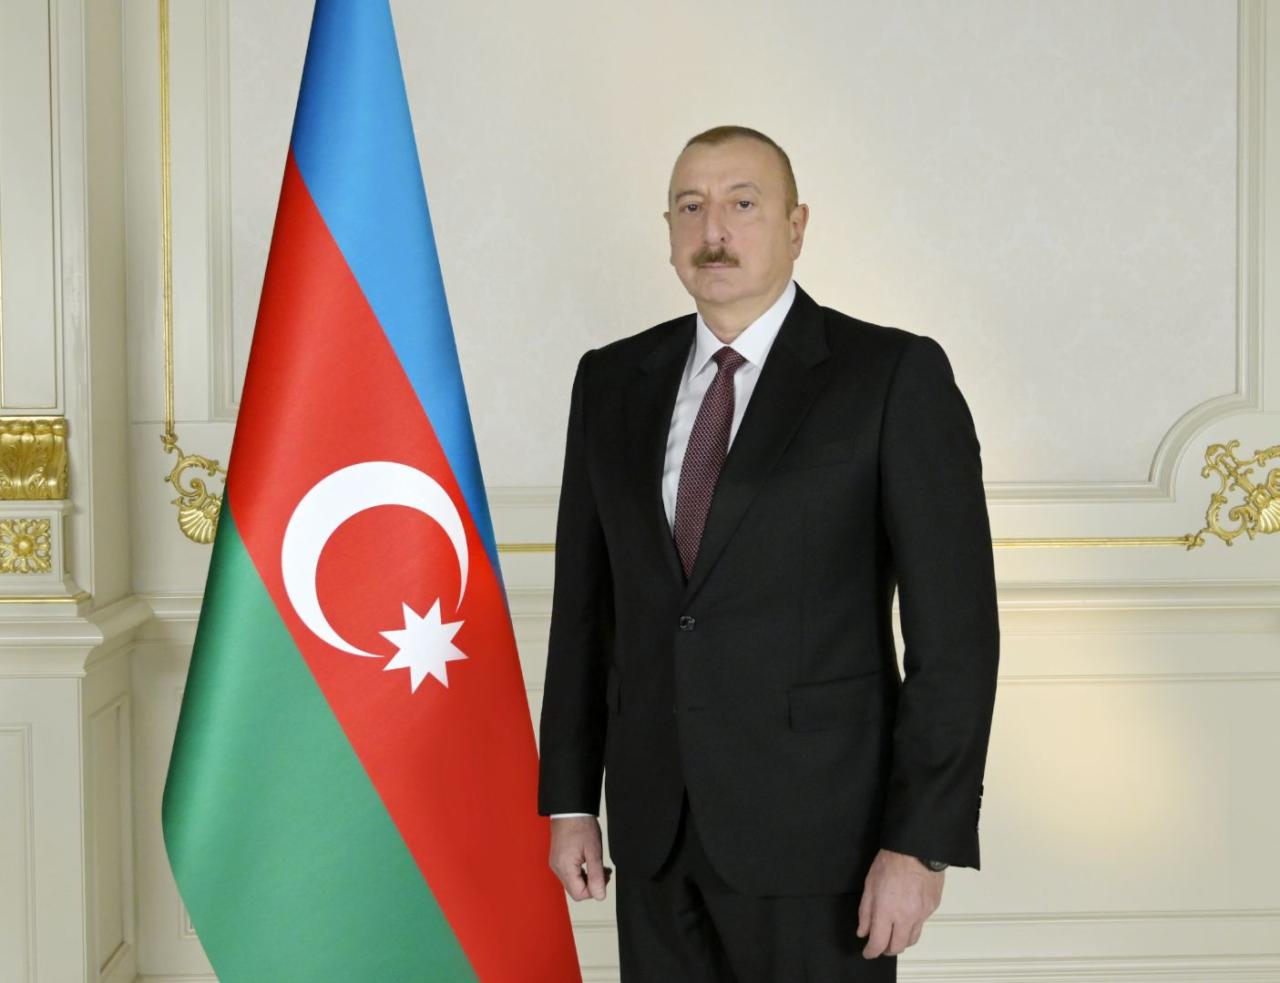 Former Prime Minister of Croatia sends letter to president of Azerbaijan